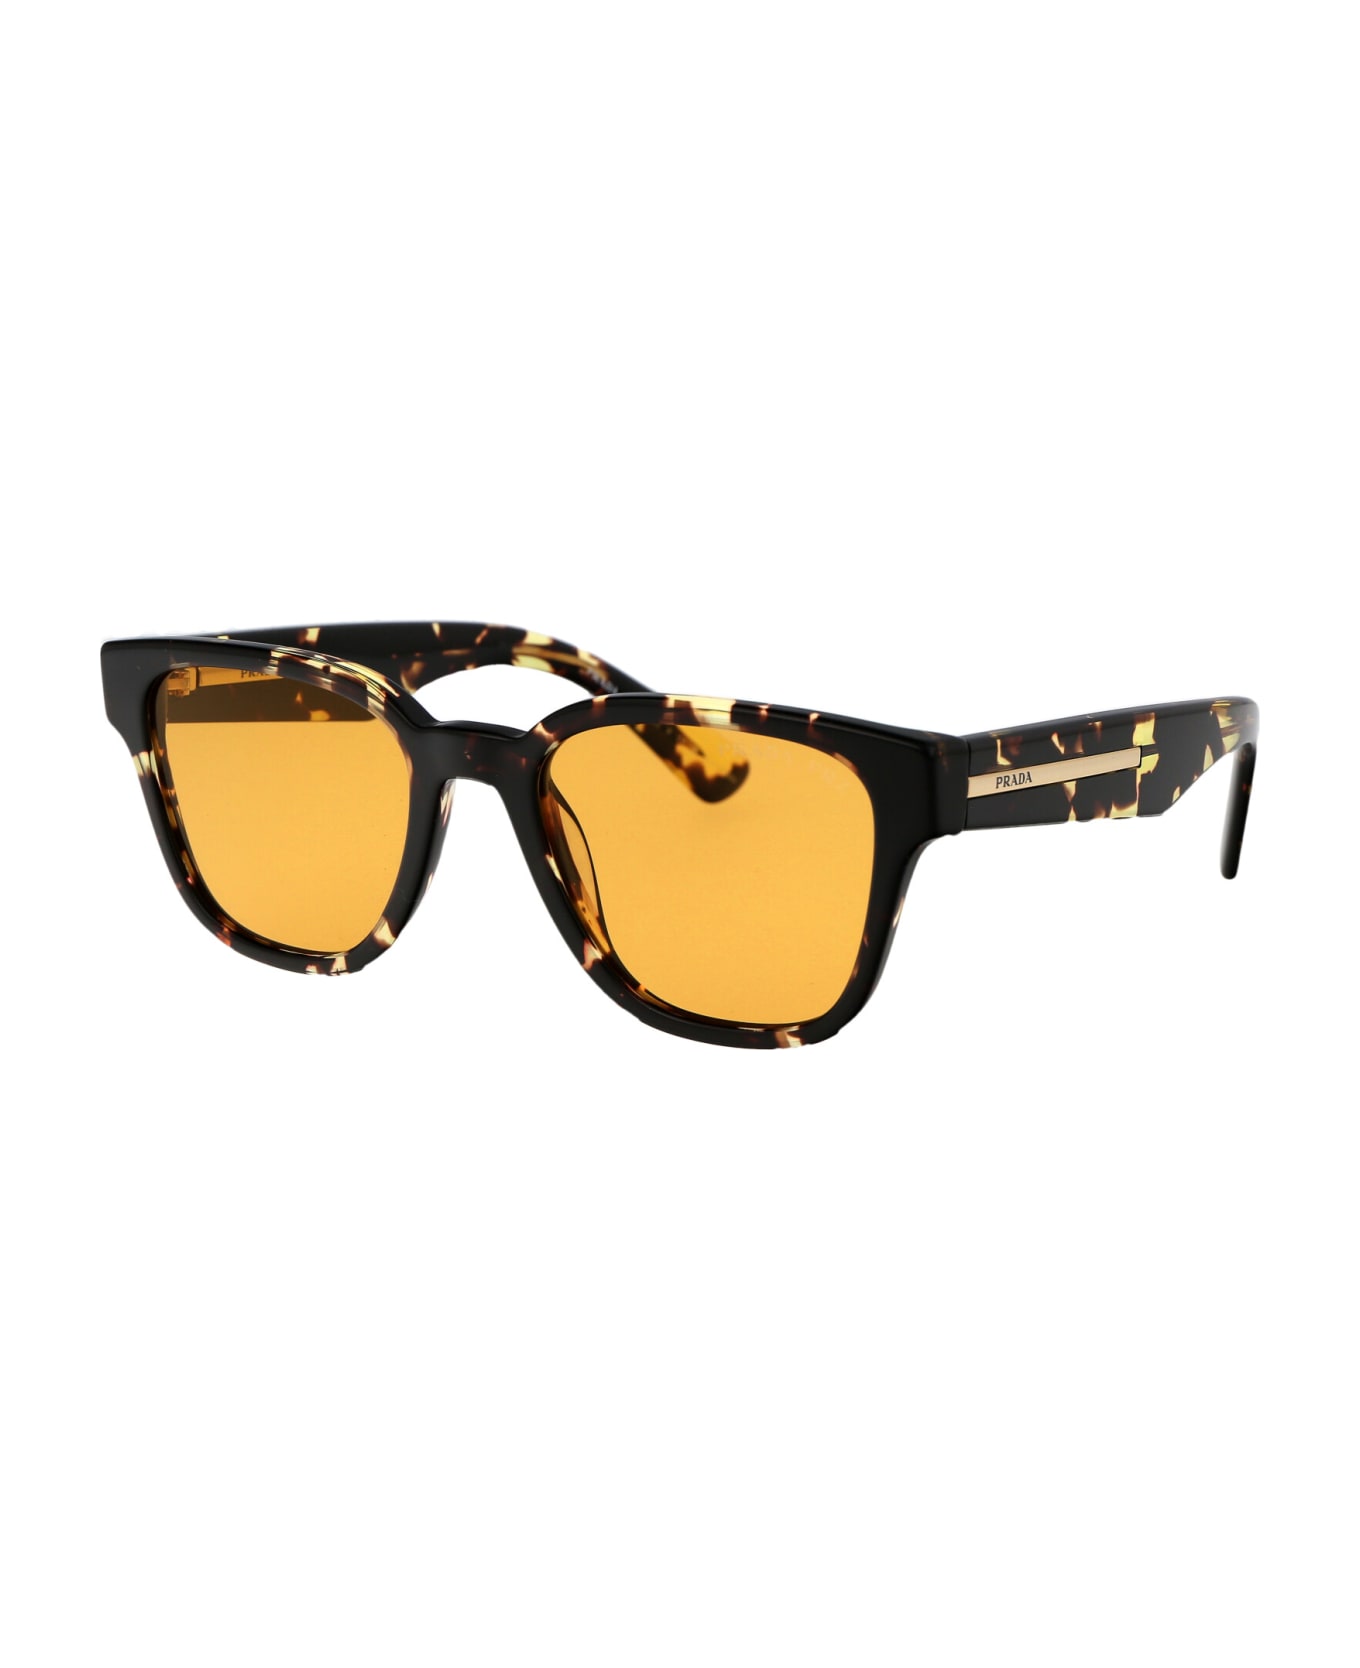 Prada Eyewear 0pr A04s Sunglasses - 16O20C Havana Black/Yellow サングラス